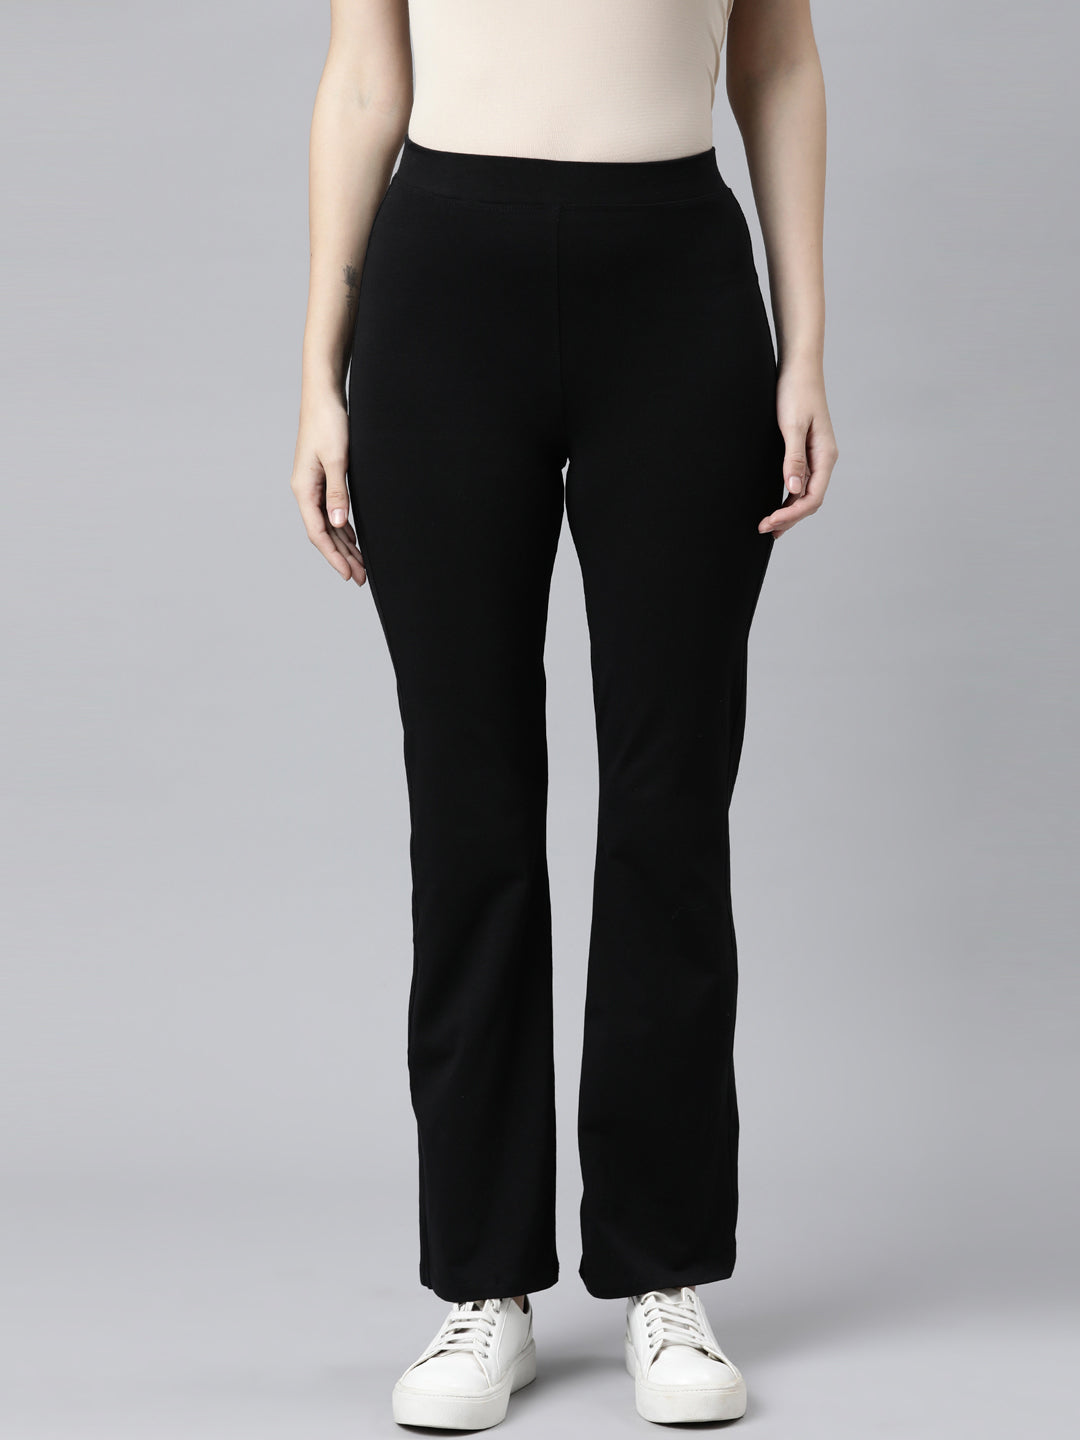 Kourbela Black cotton Compact Chic flare pants < Women's Pants